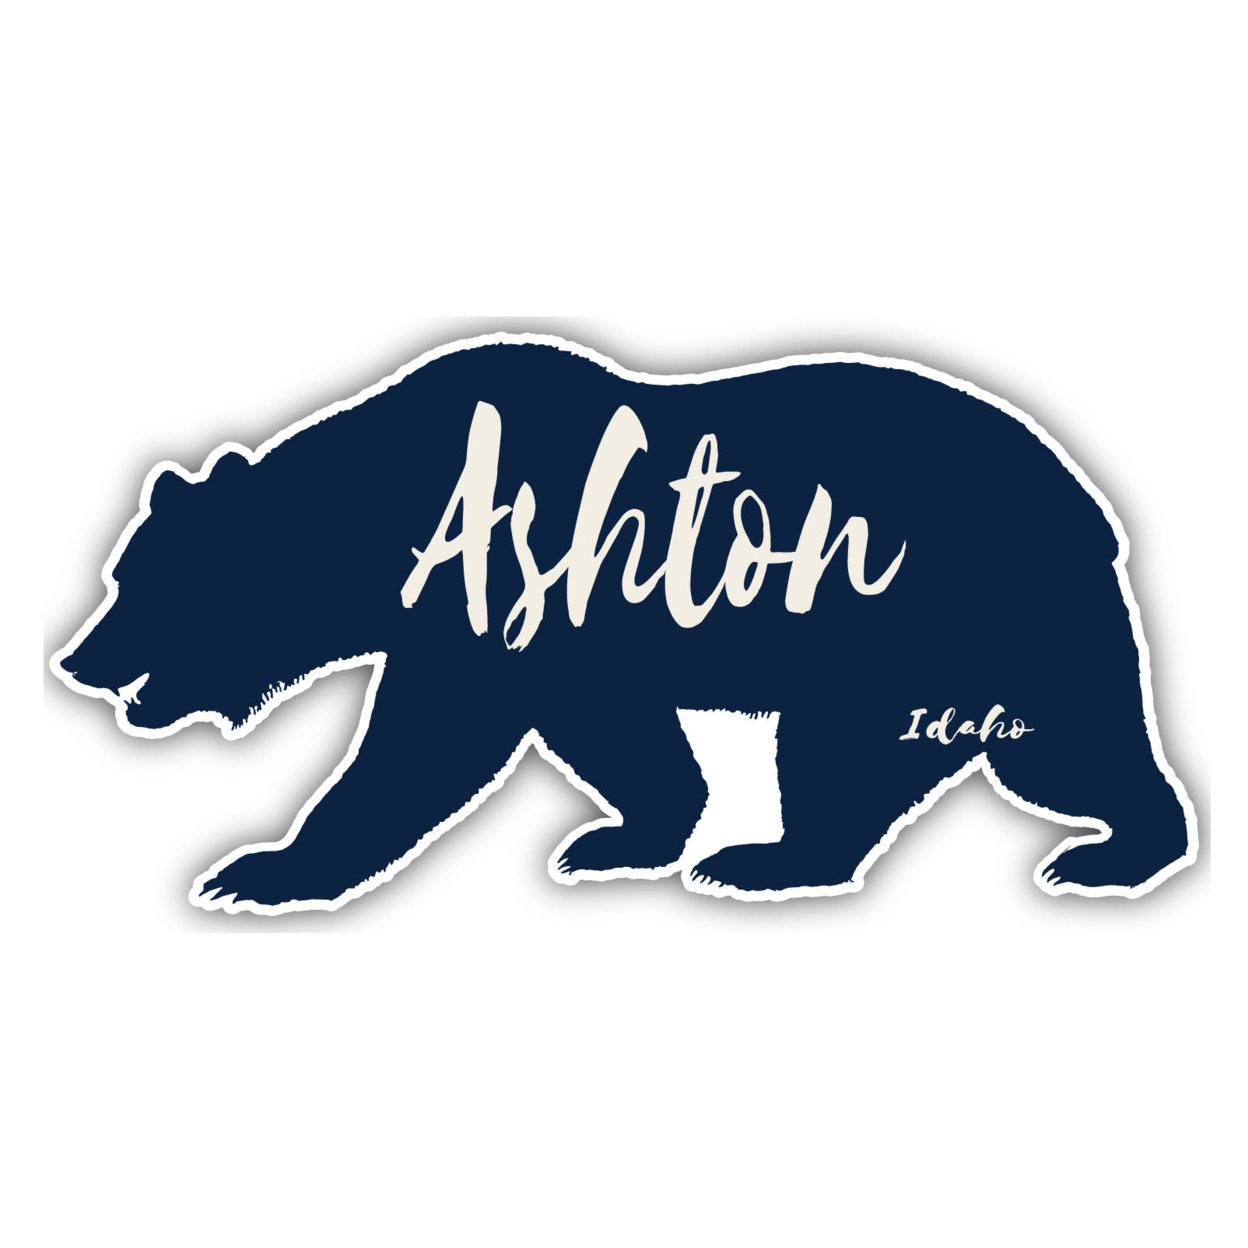 Ashton Idaho Souvenir Decorative Stickers (Choose Theme And Size) - 4-Pack, 4-Inch, Tent